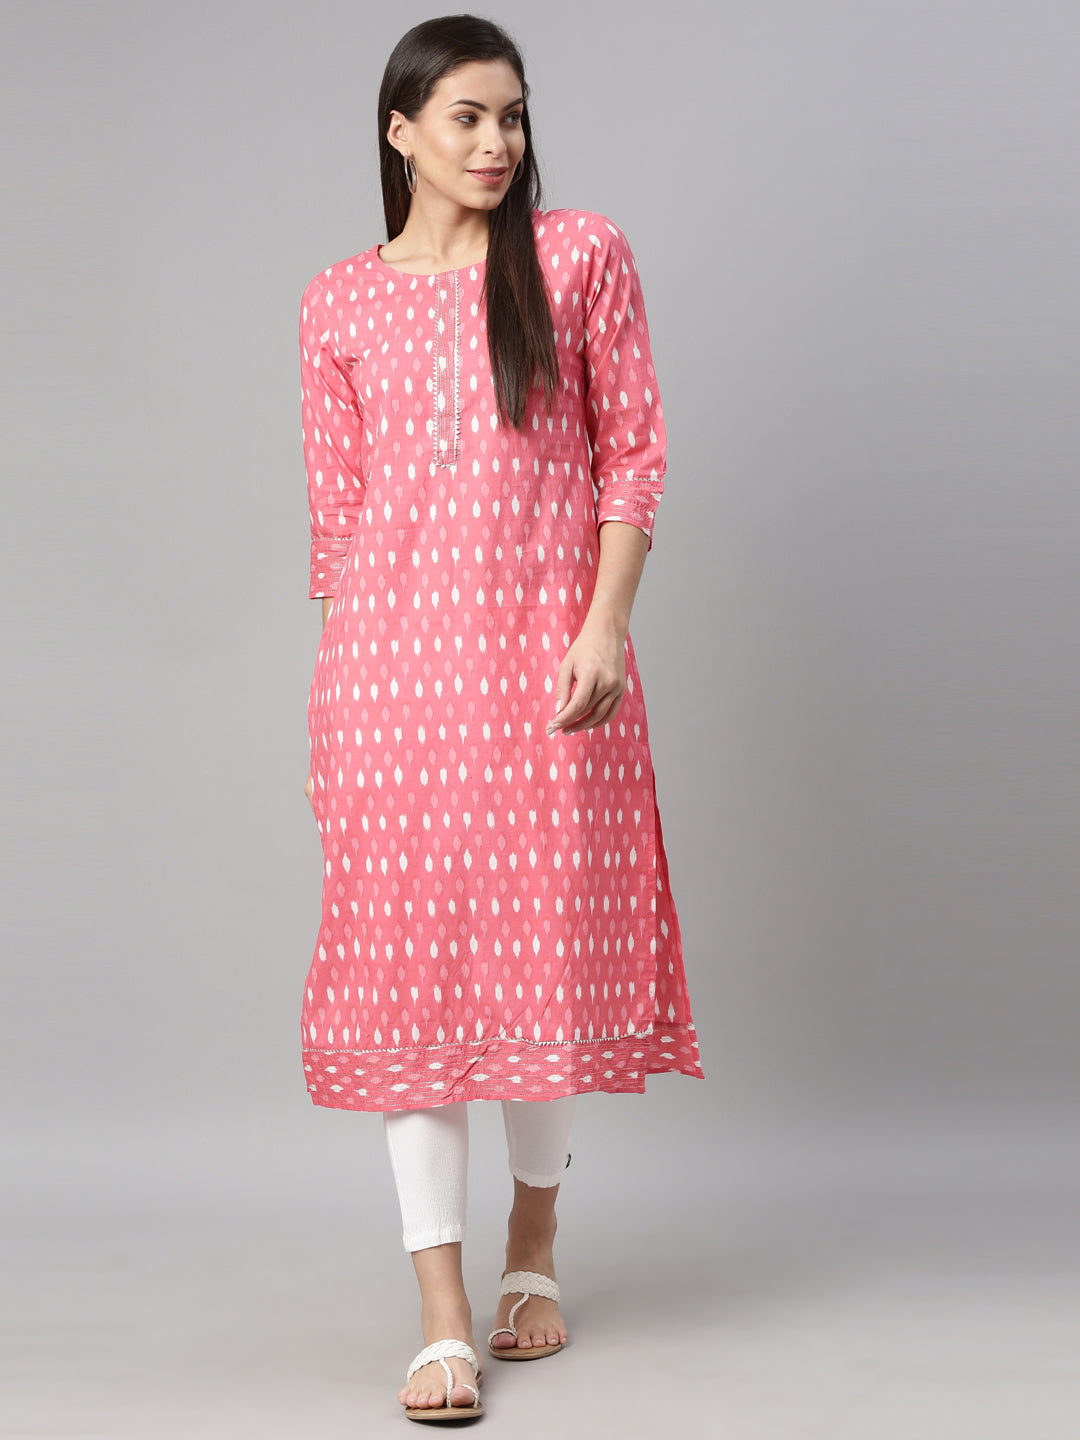 Neeru's Rani Pink Color Cotton Fabric Kurta